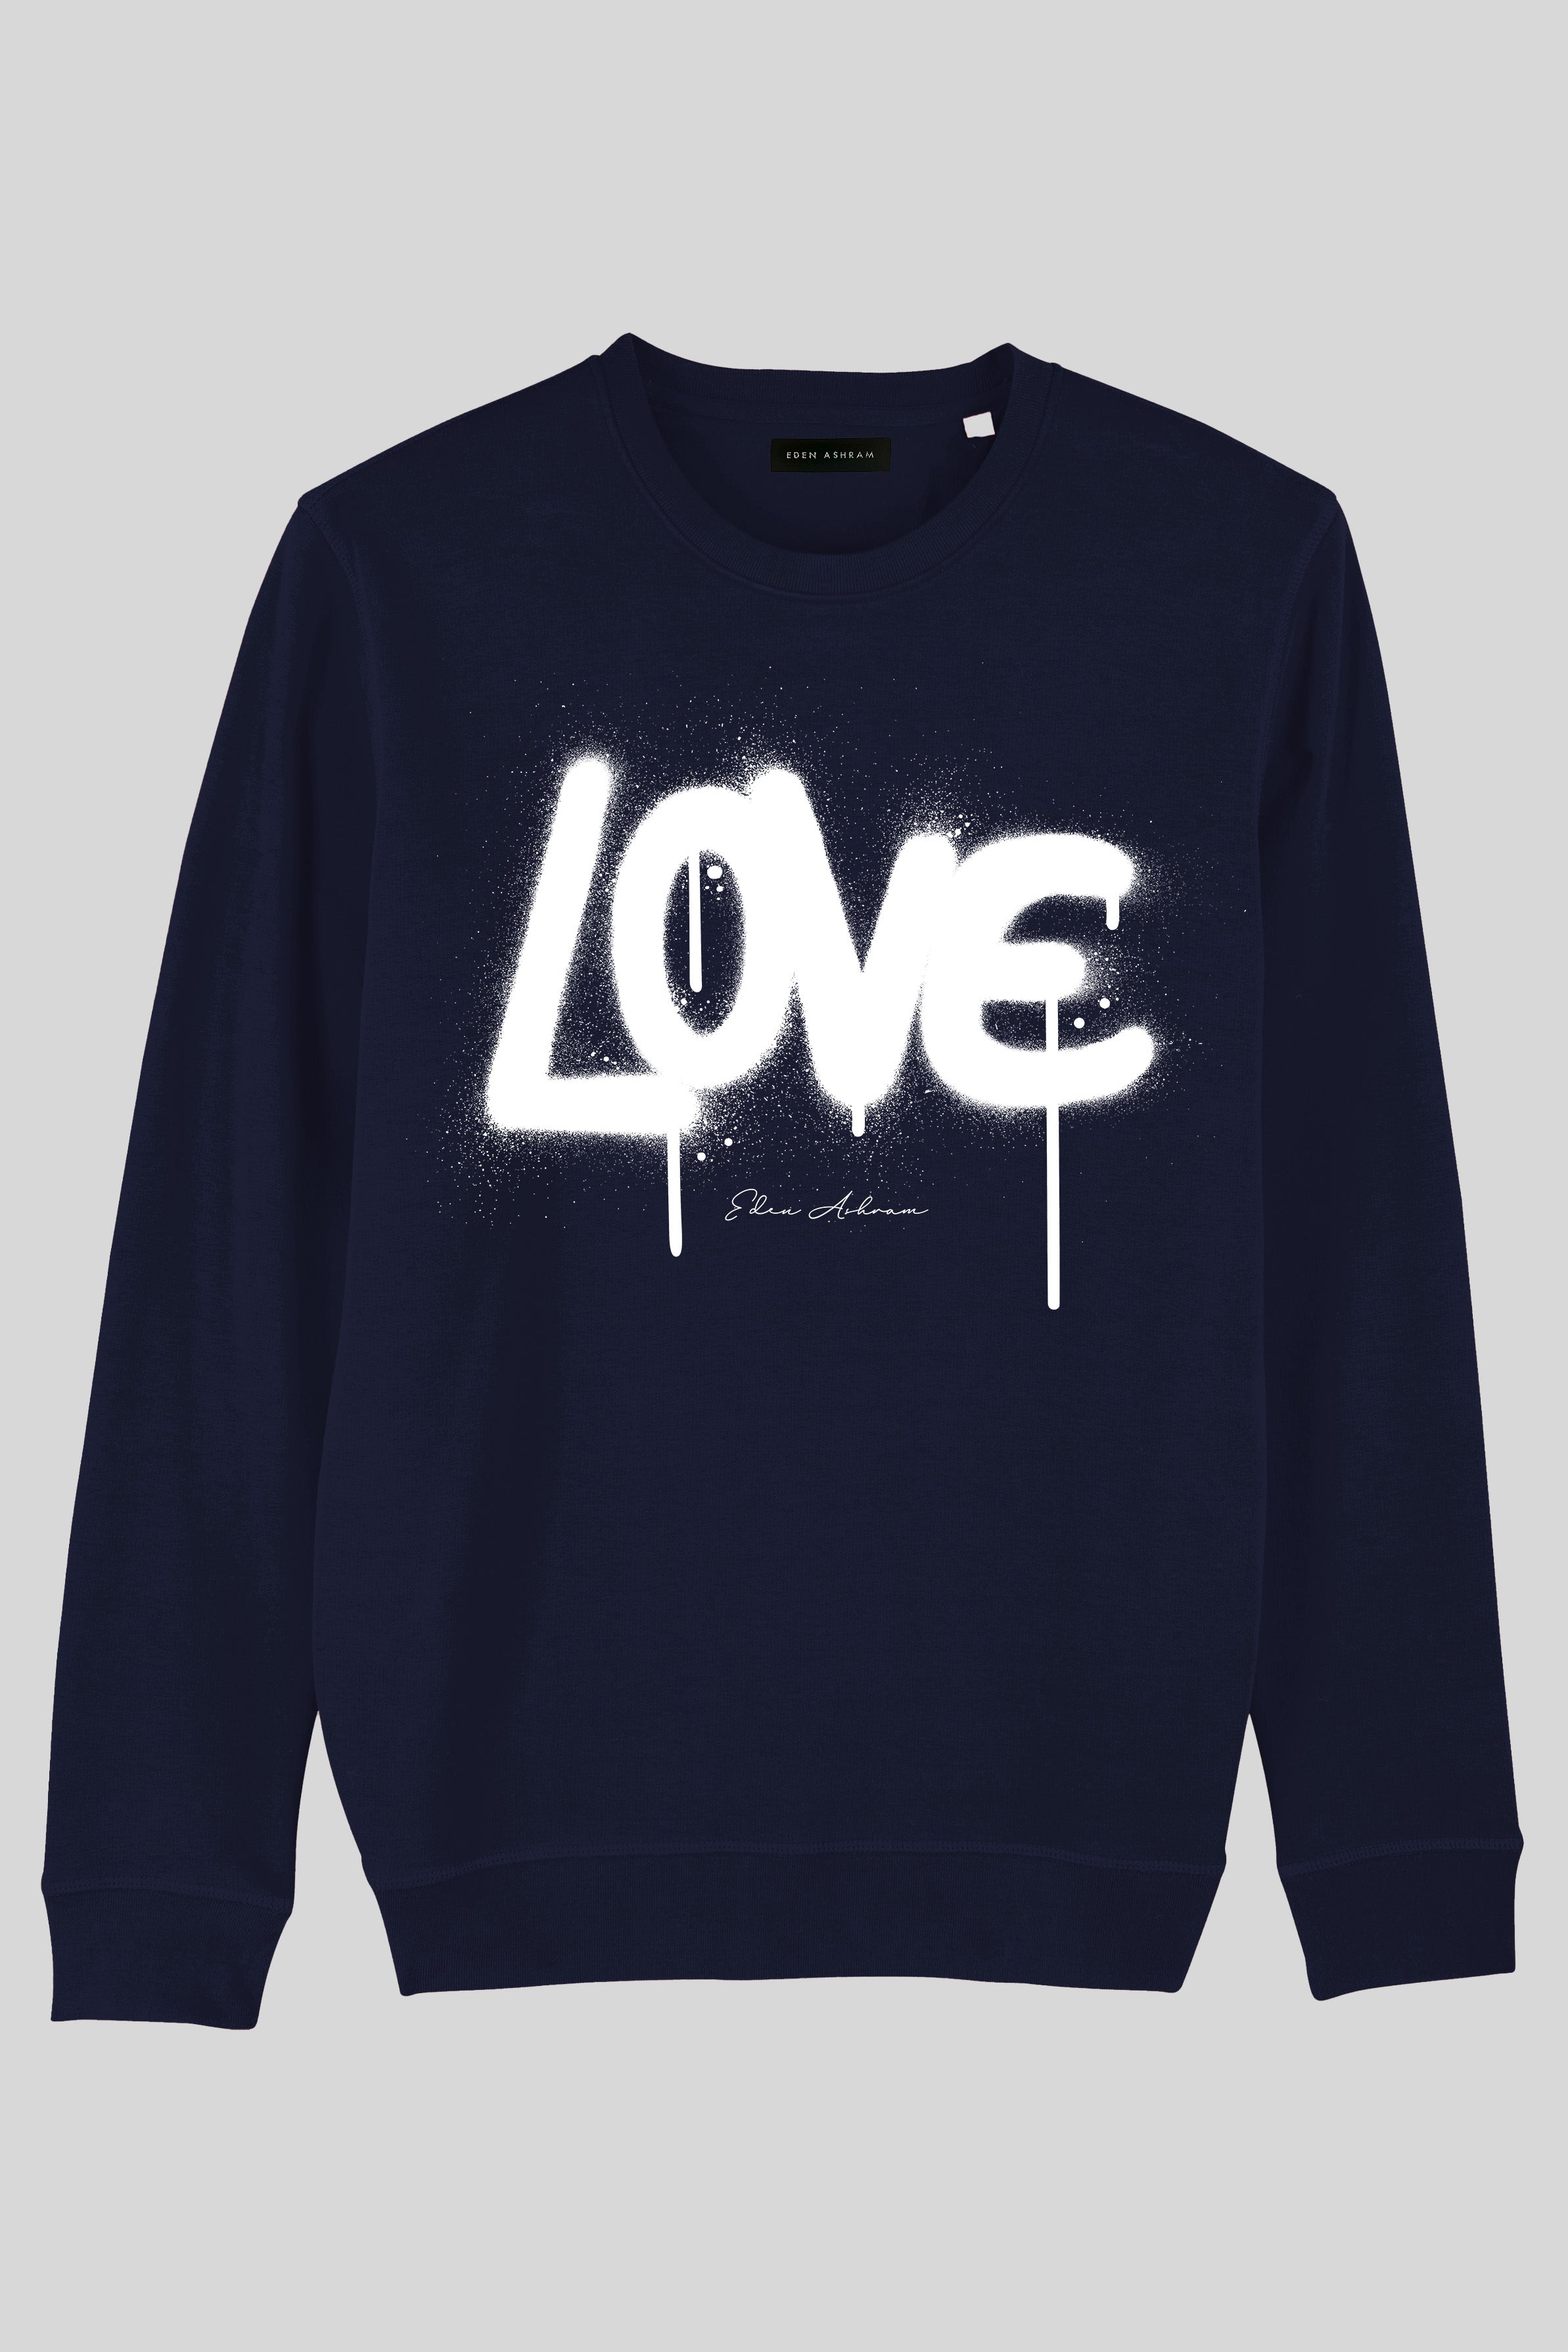 Eden Ashram Graffiti Love Premium Crew Neck Sweatshirt French Navy